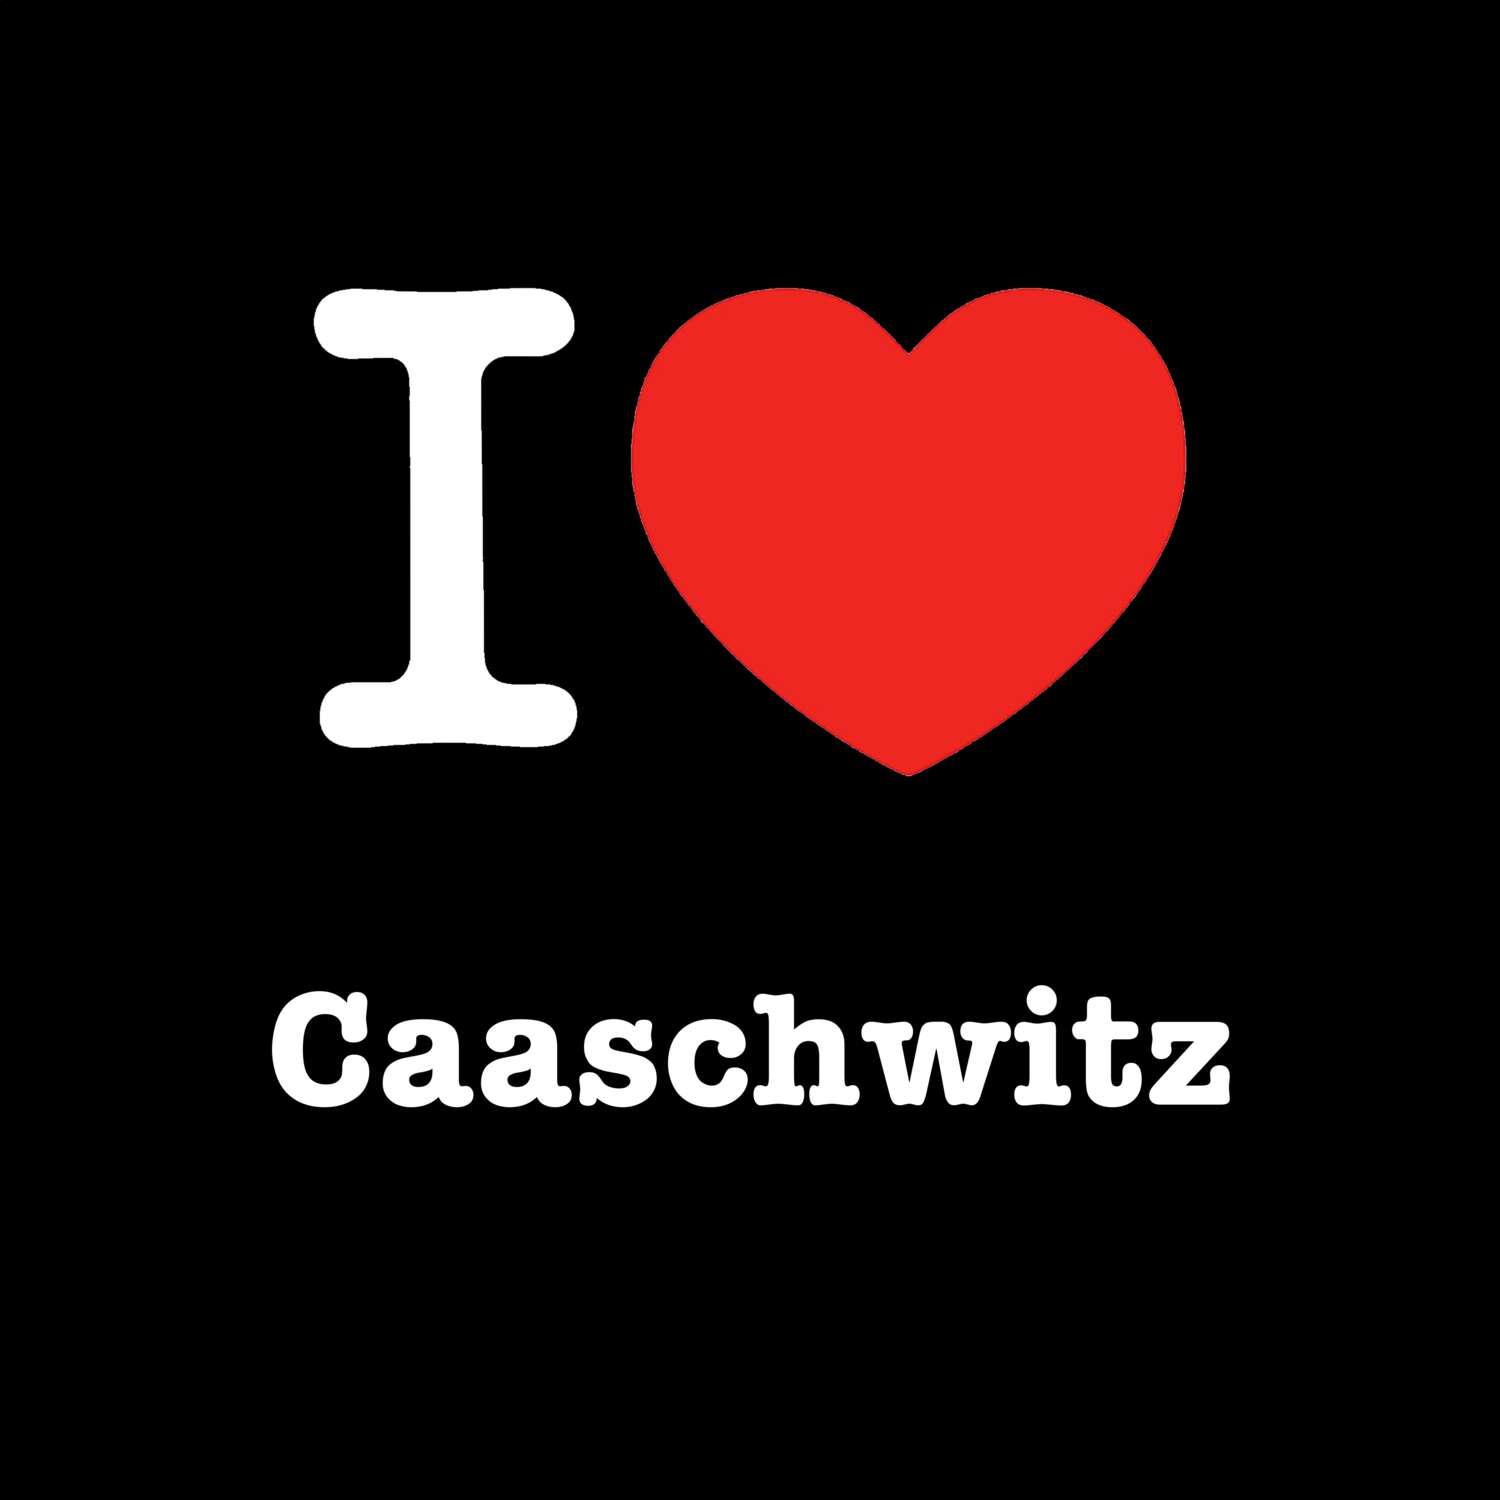 Caaschwitz T-Shirt »I love«